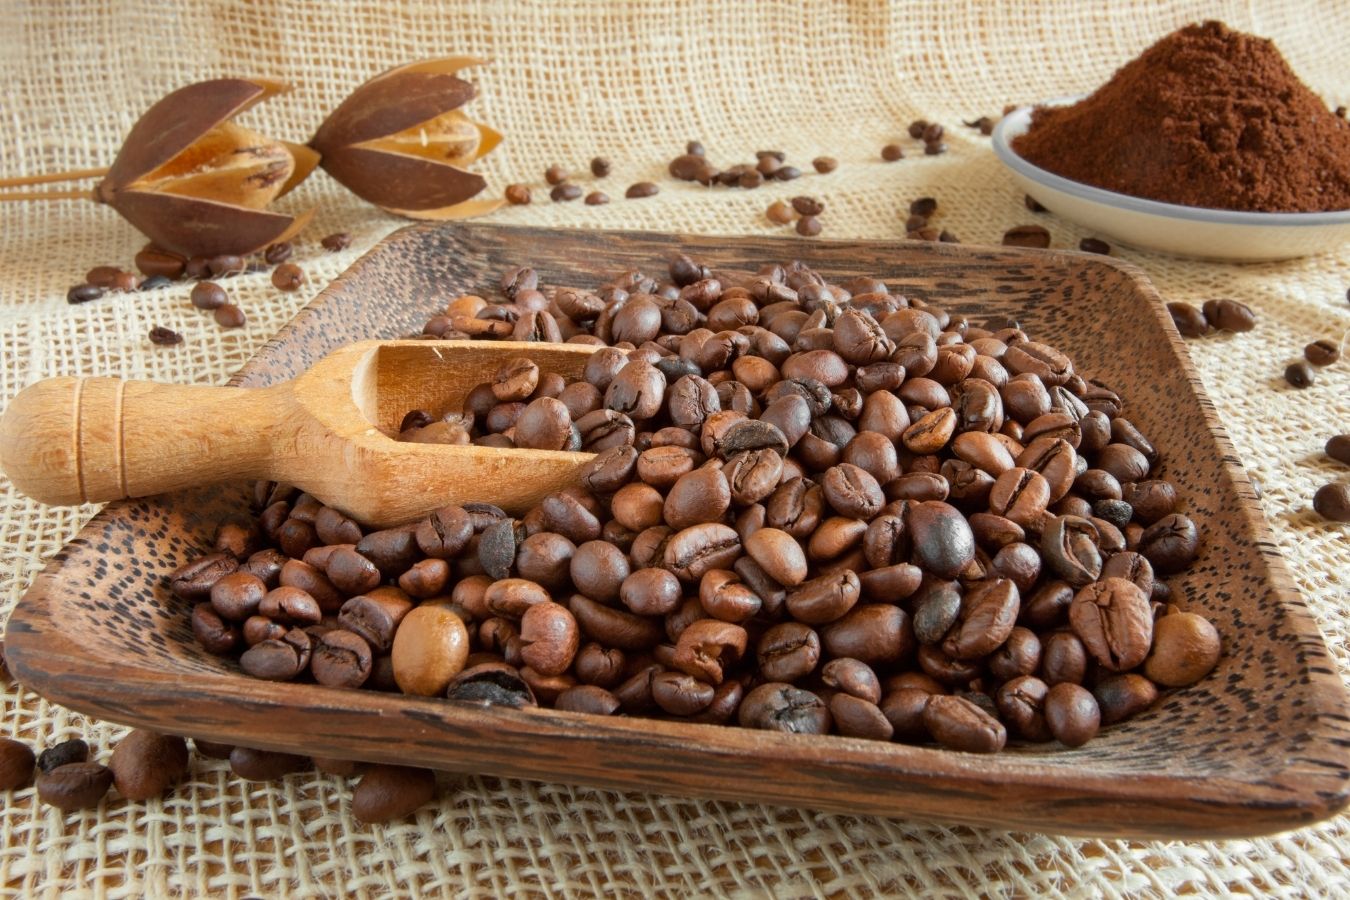 10 Ways to Make Coffee Less Bitter